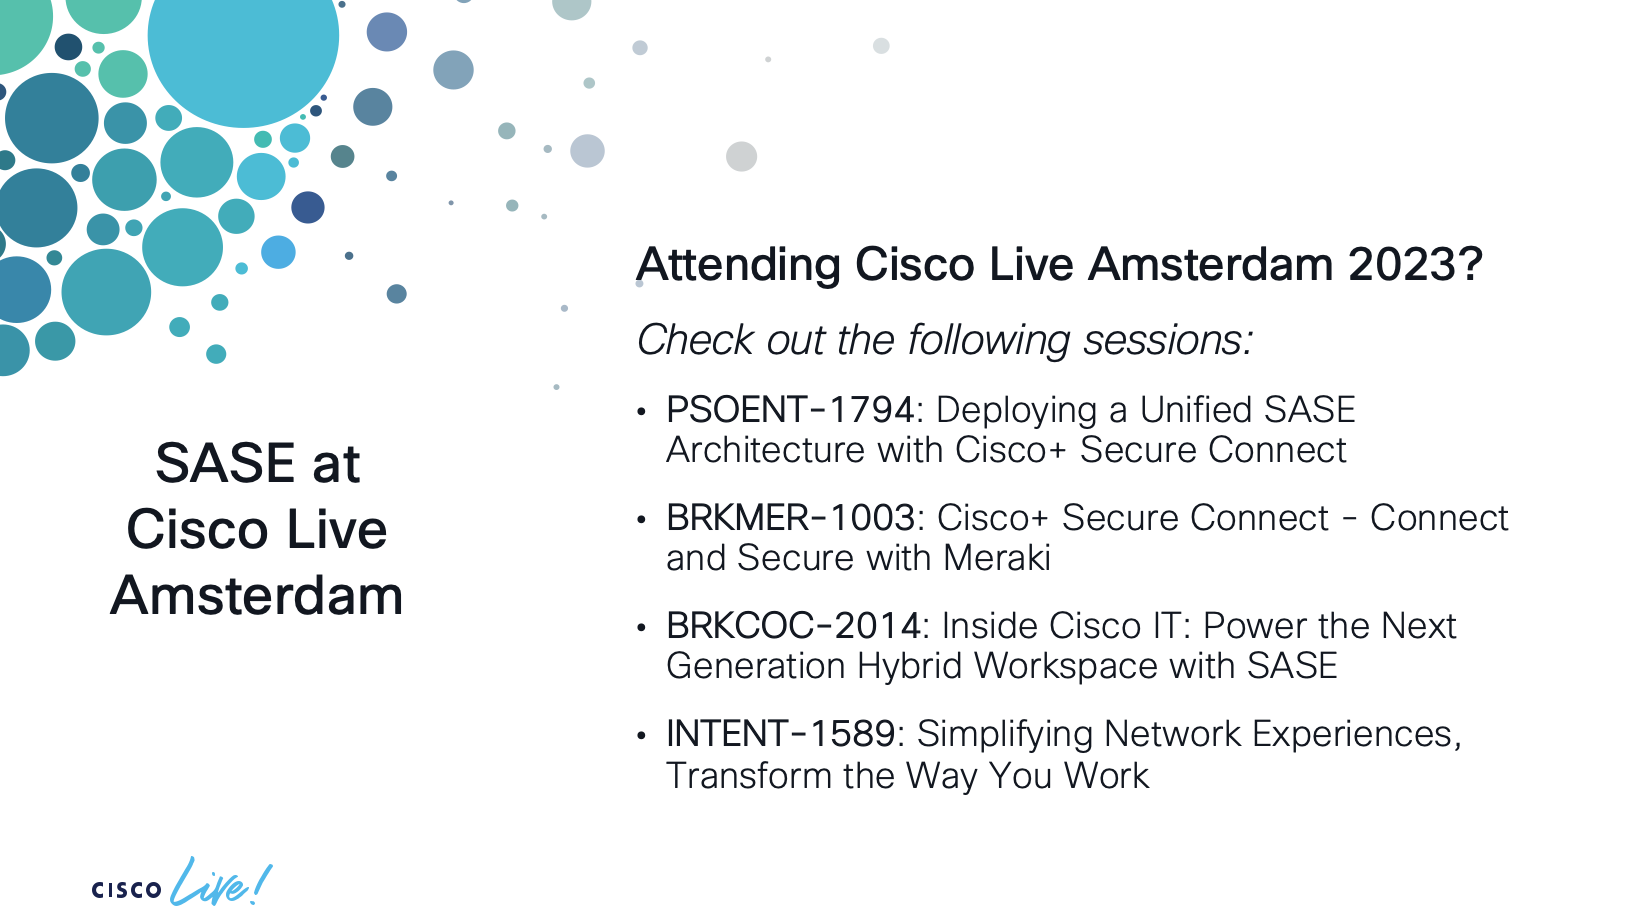 SASE Sessions at Cisco Live Amsterdam 2023